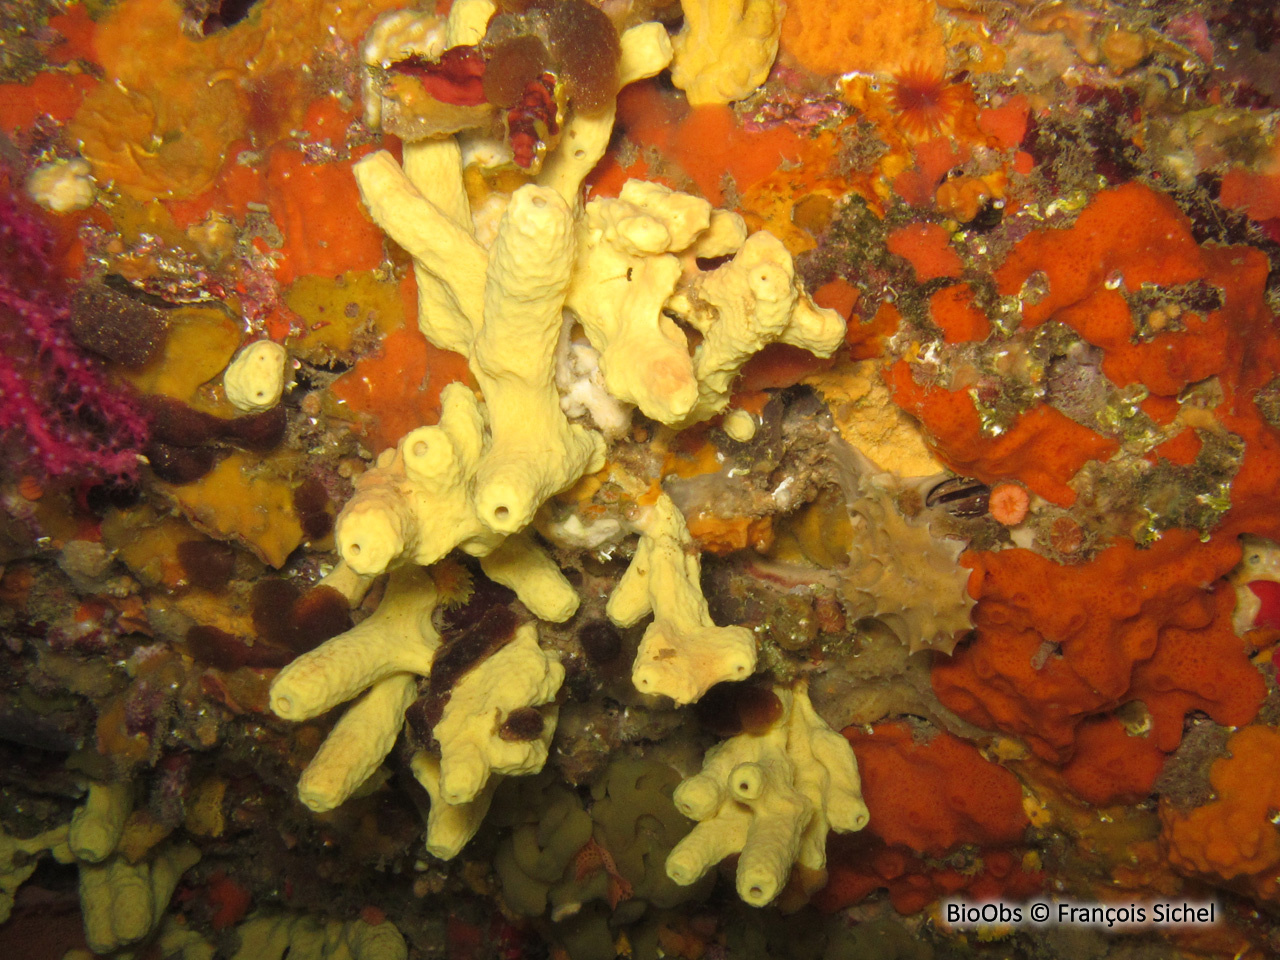 Eponge cavernicole jaune - Aplysina cavernicola - François Sichel - BioObs